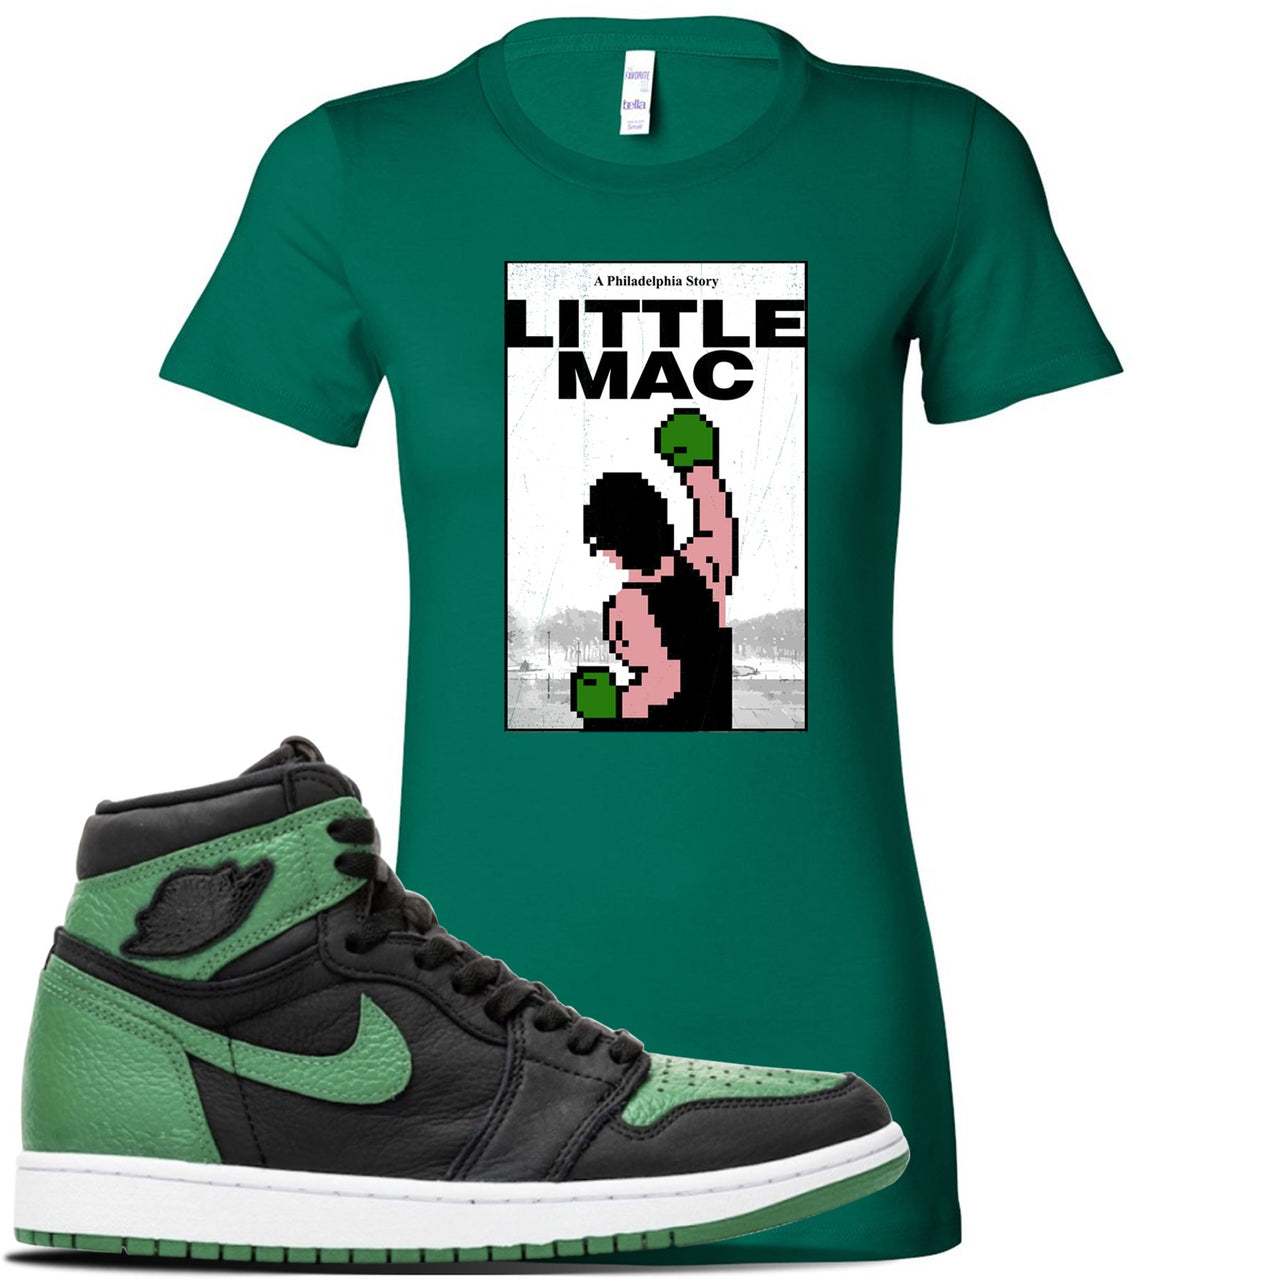 Jordan 1 Retro High OG Pine Green Gym Sneaker Kelly Green Women's T Shirt | Women's Tees to match Air Jordan 1 Retro High OG Pine Green Gym Shoes | Little Mac A Philly Story